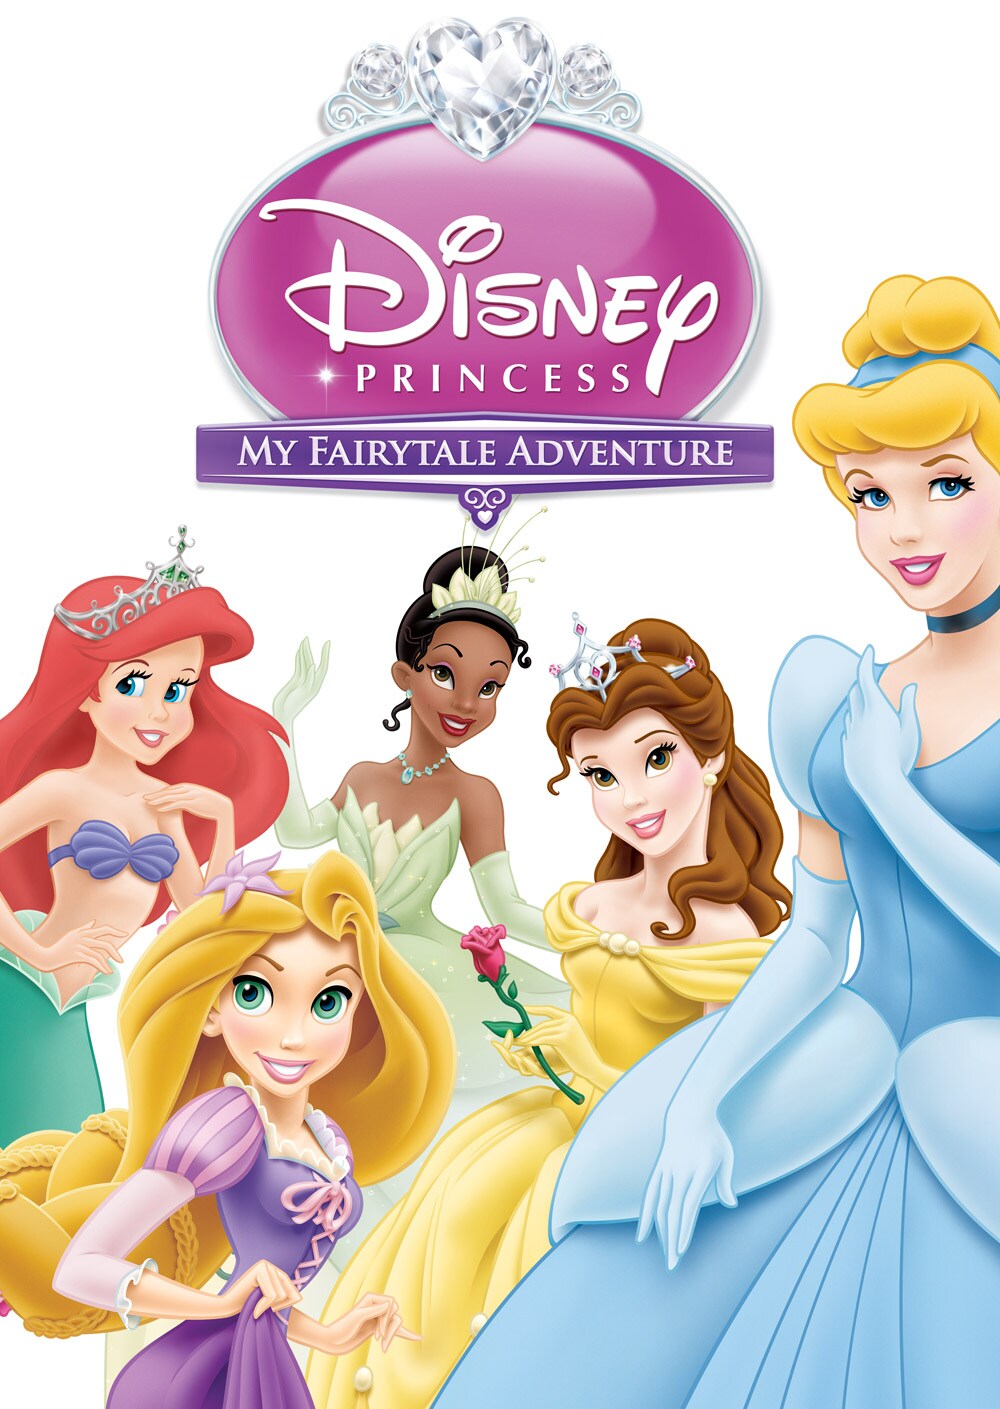 disney princess enchanted journey free download pc